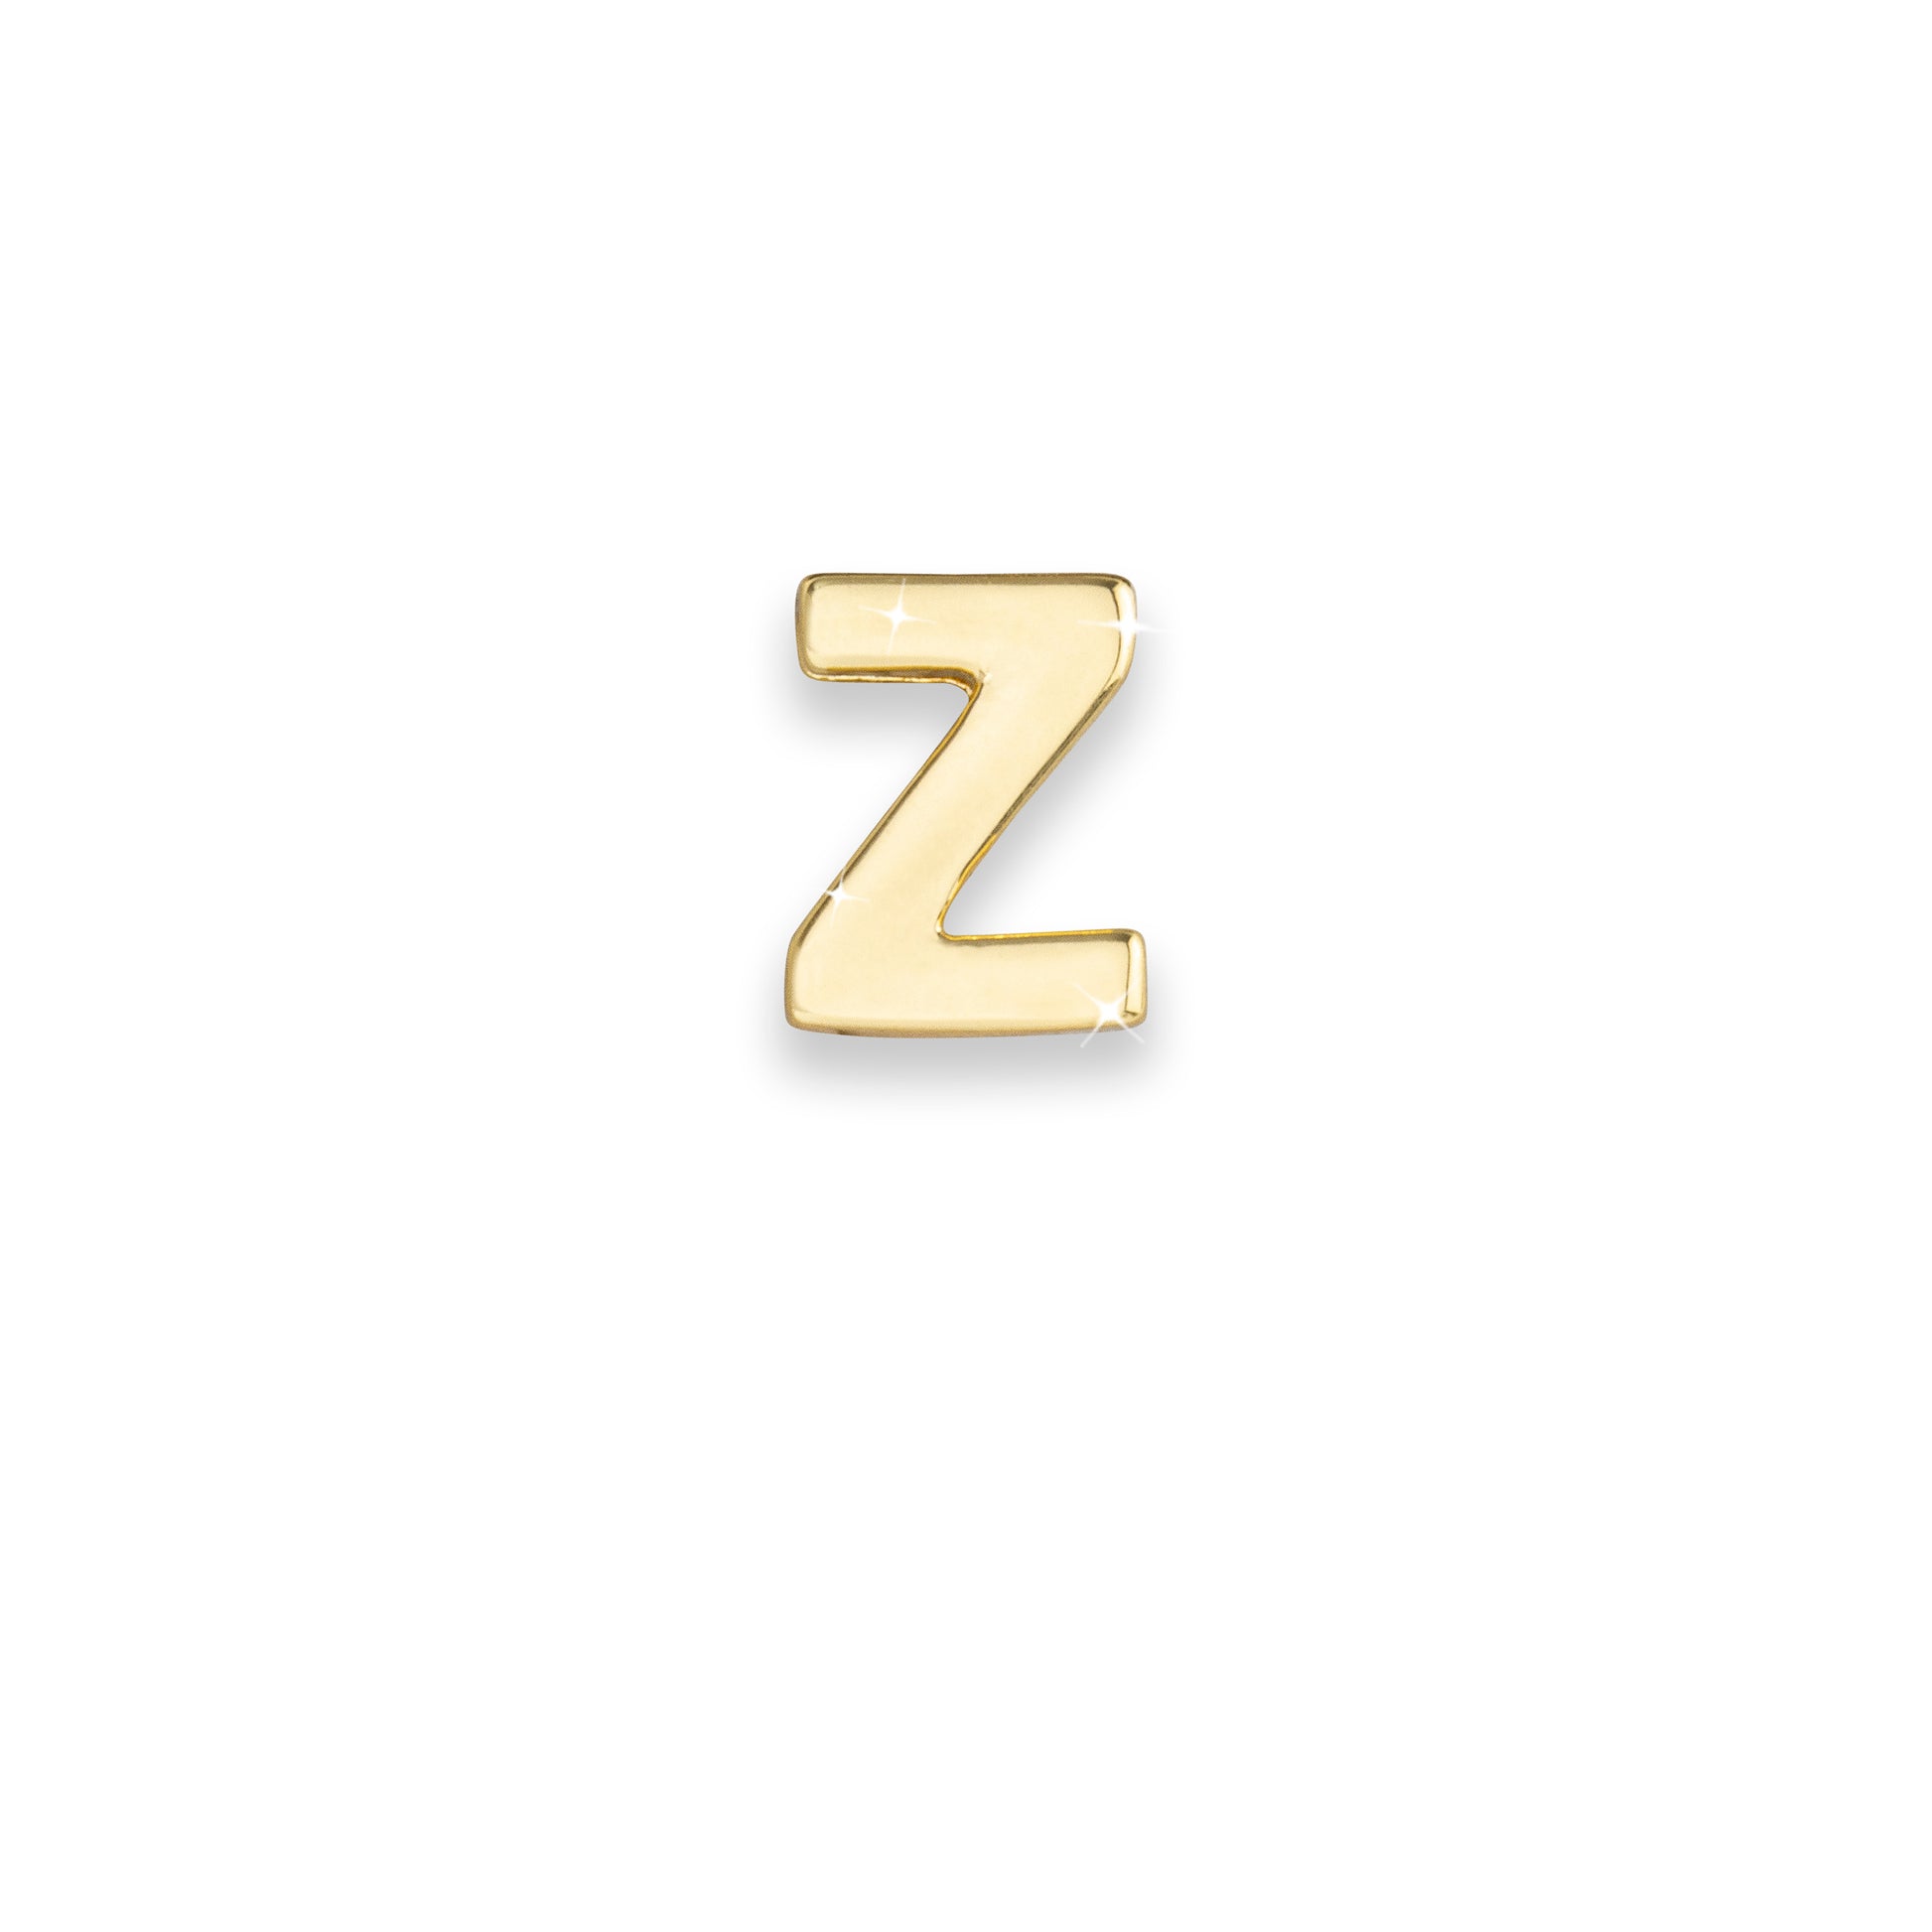 Gold letter Z monogram charm for necklaces & bracelets